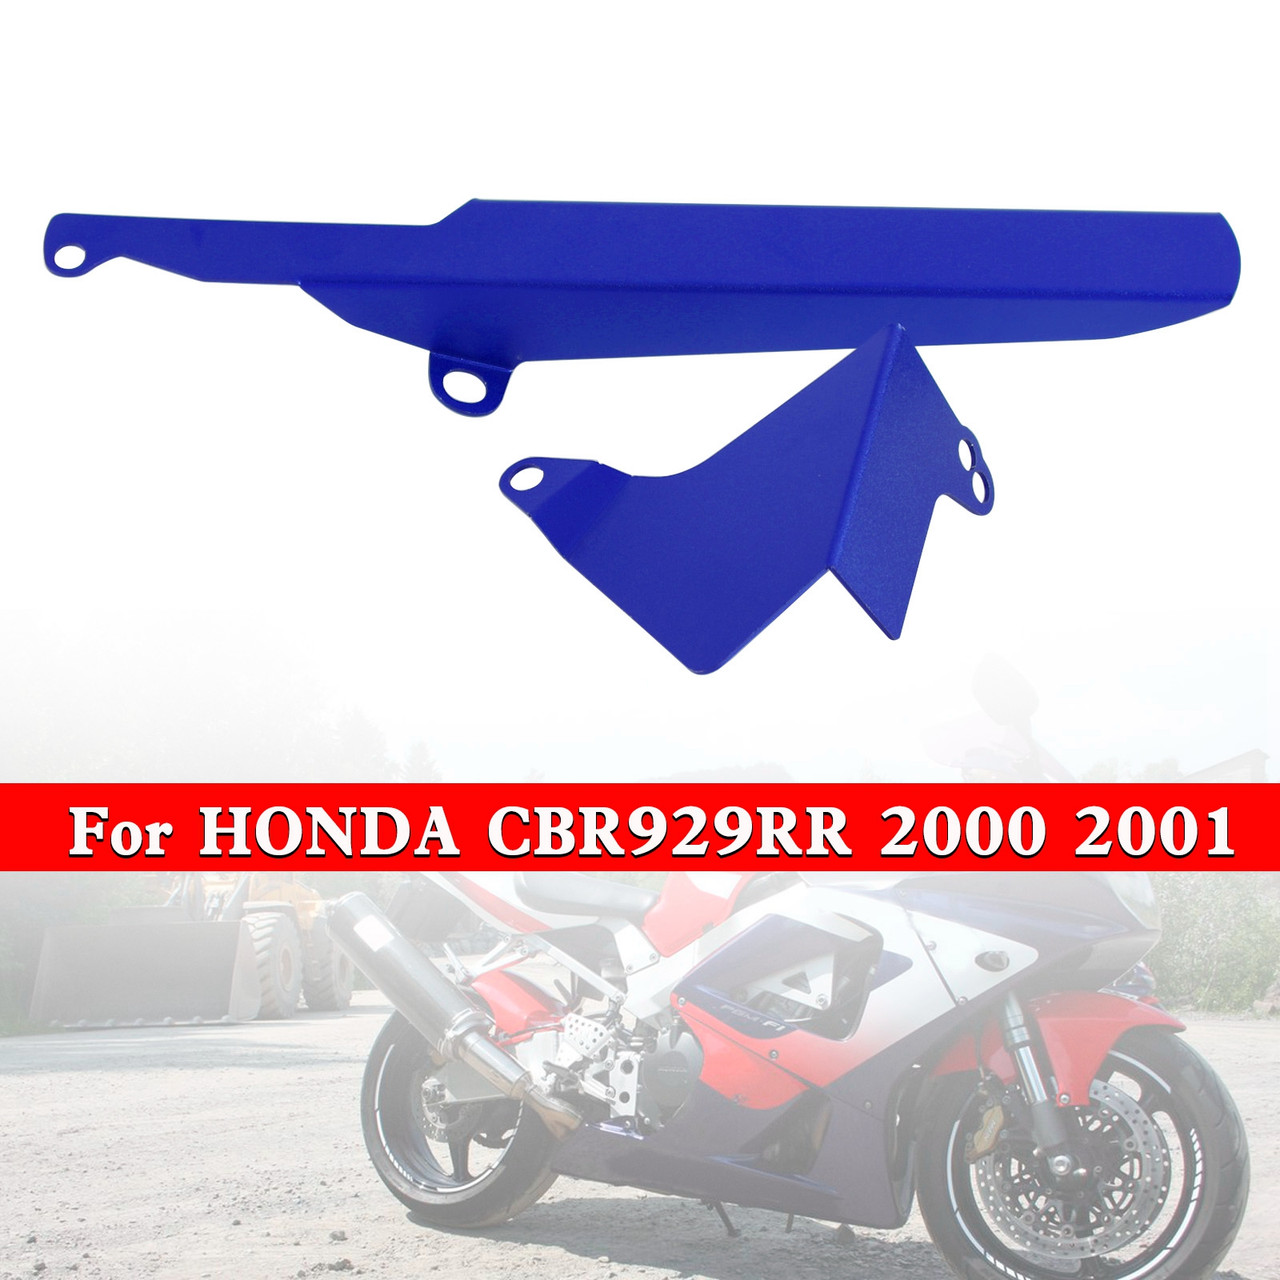 Rear Sprocket Chain Guard Protector Cover For HONDA CBR929RR 2000-2001 Blue